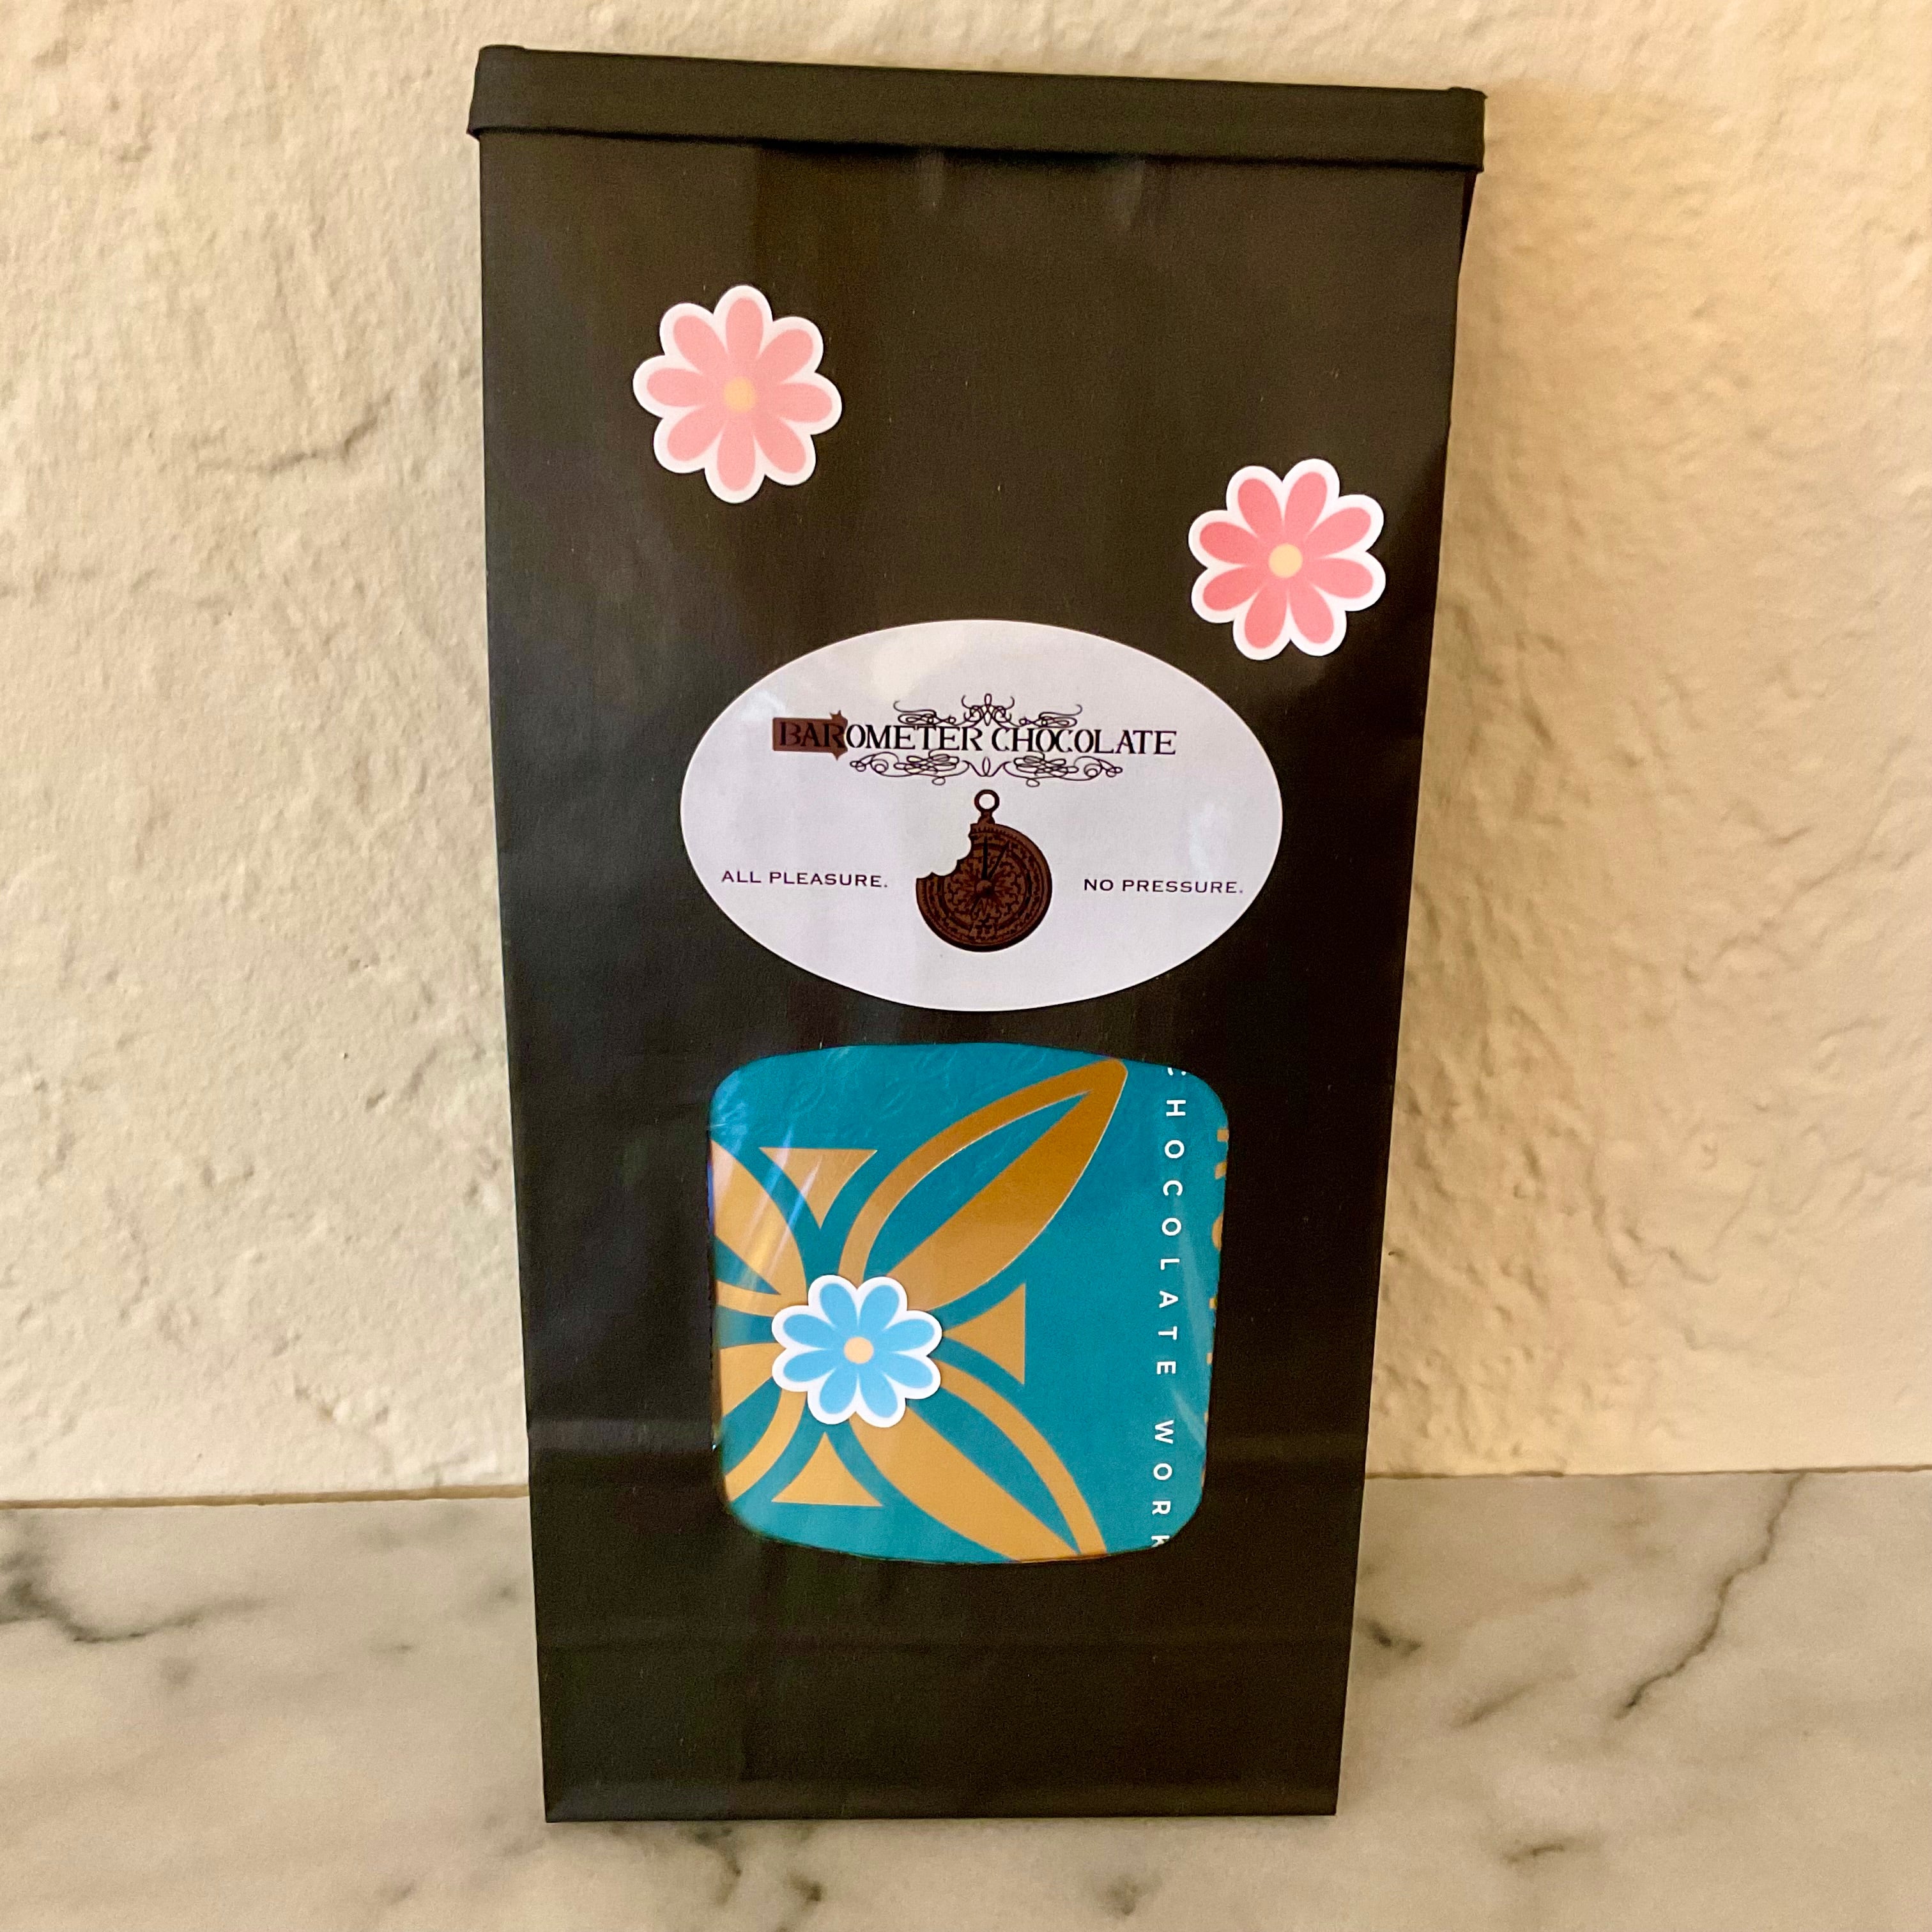 Mother’s Day Milk Chocolate Gift Set - Barometer Chocolate